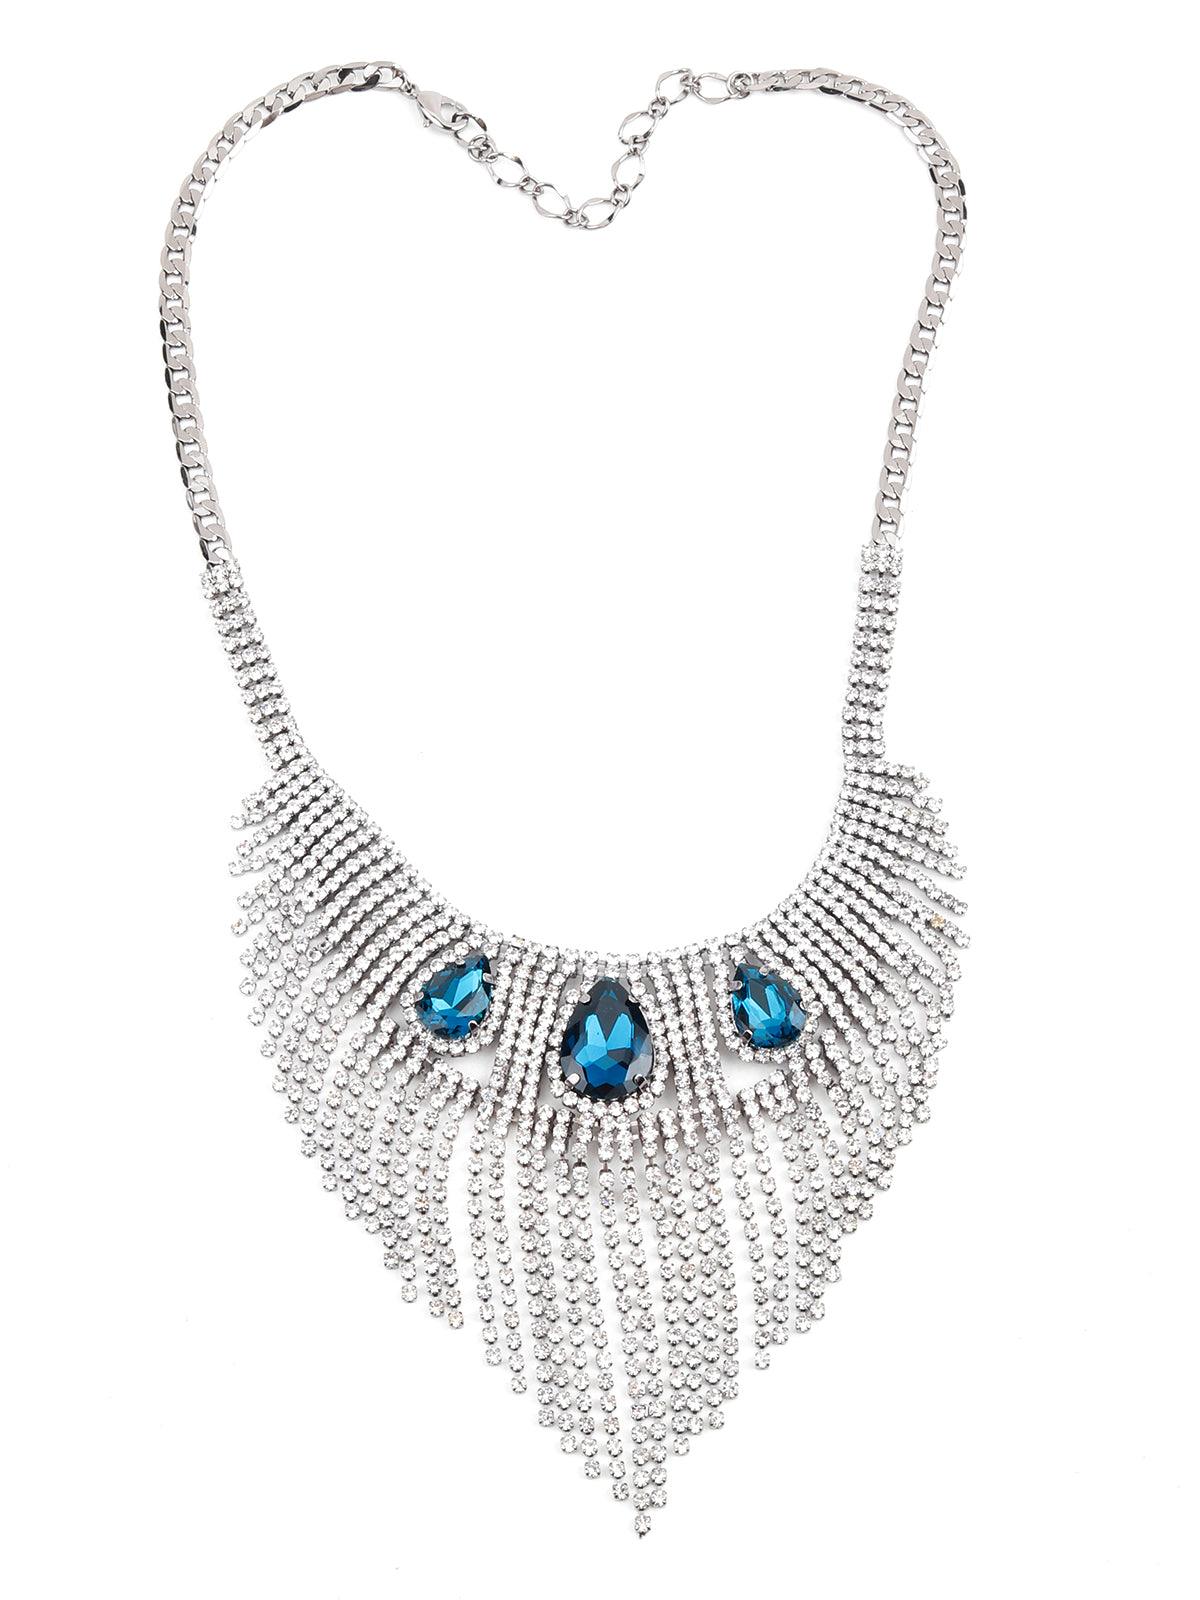 Sophisticated turquoise fringe necklace - Odette